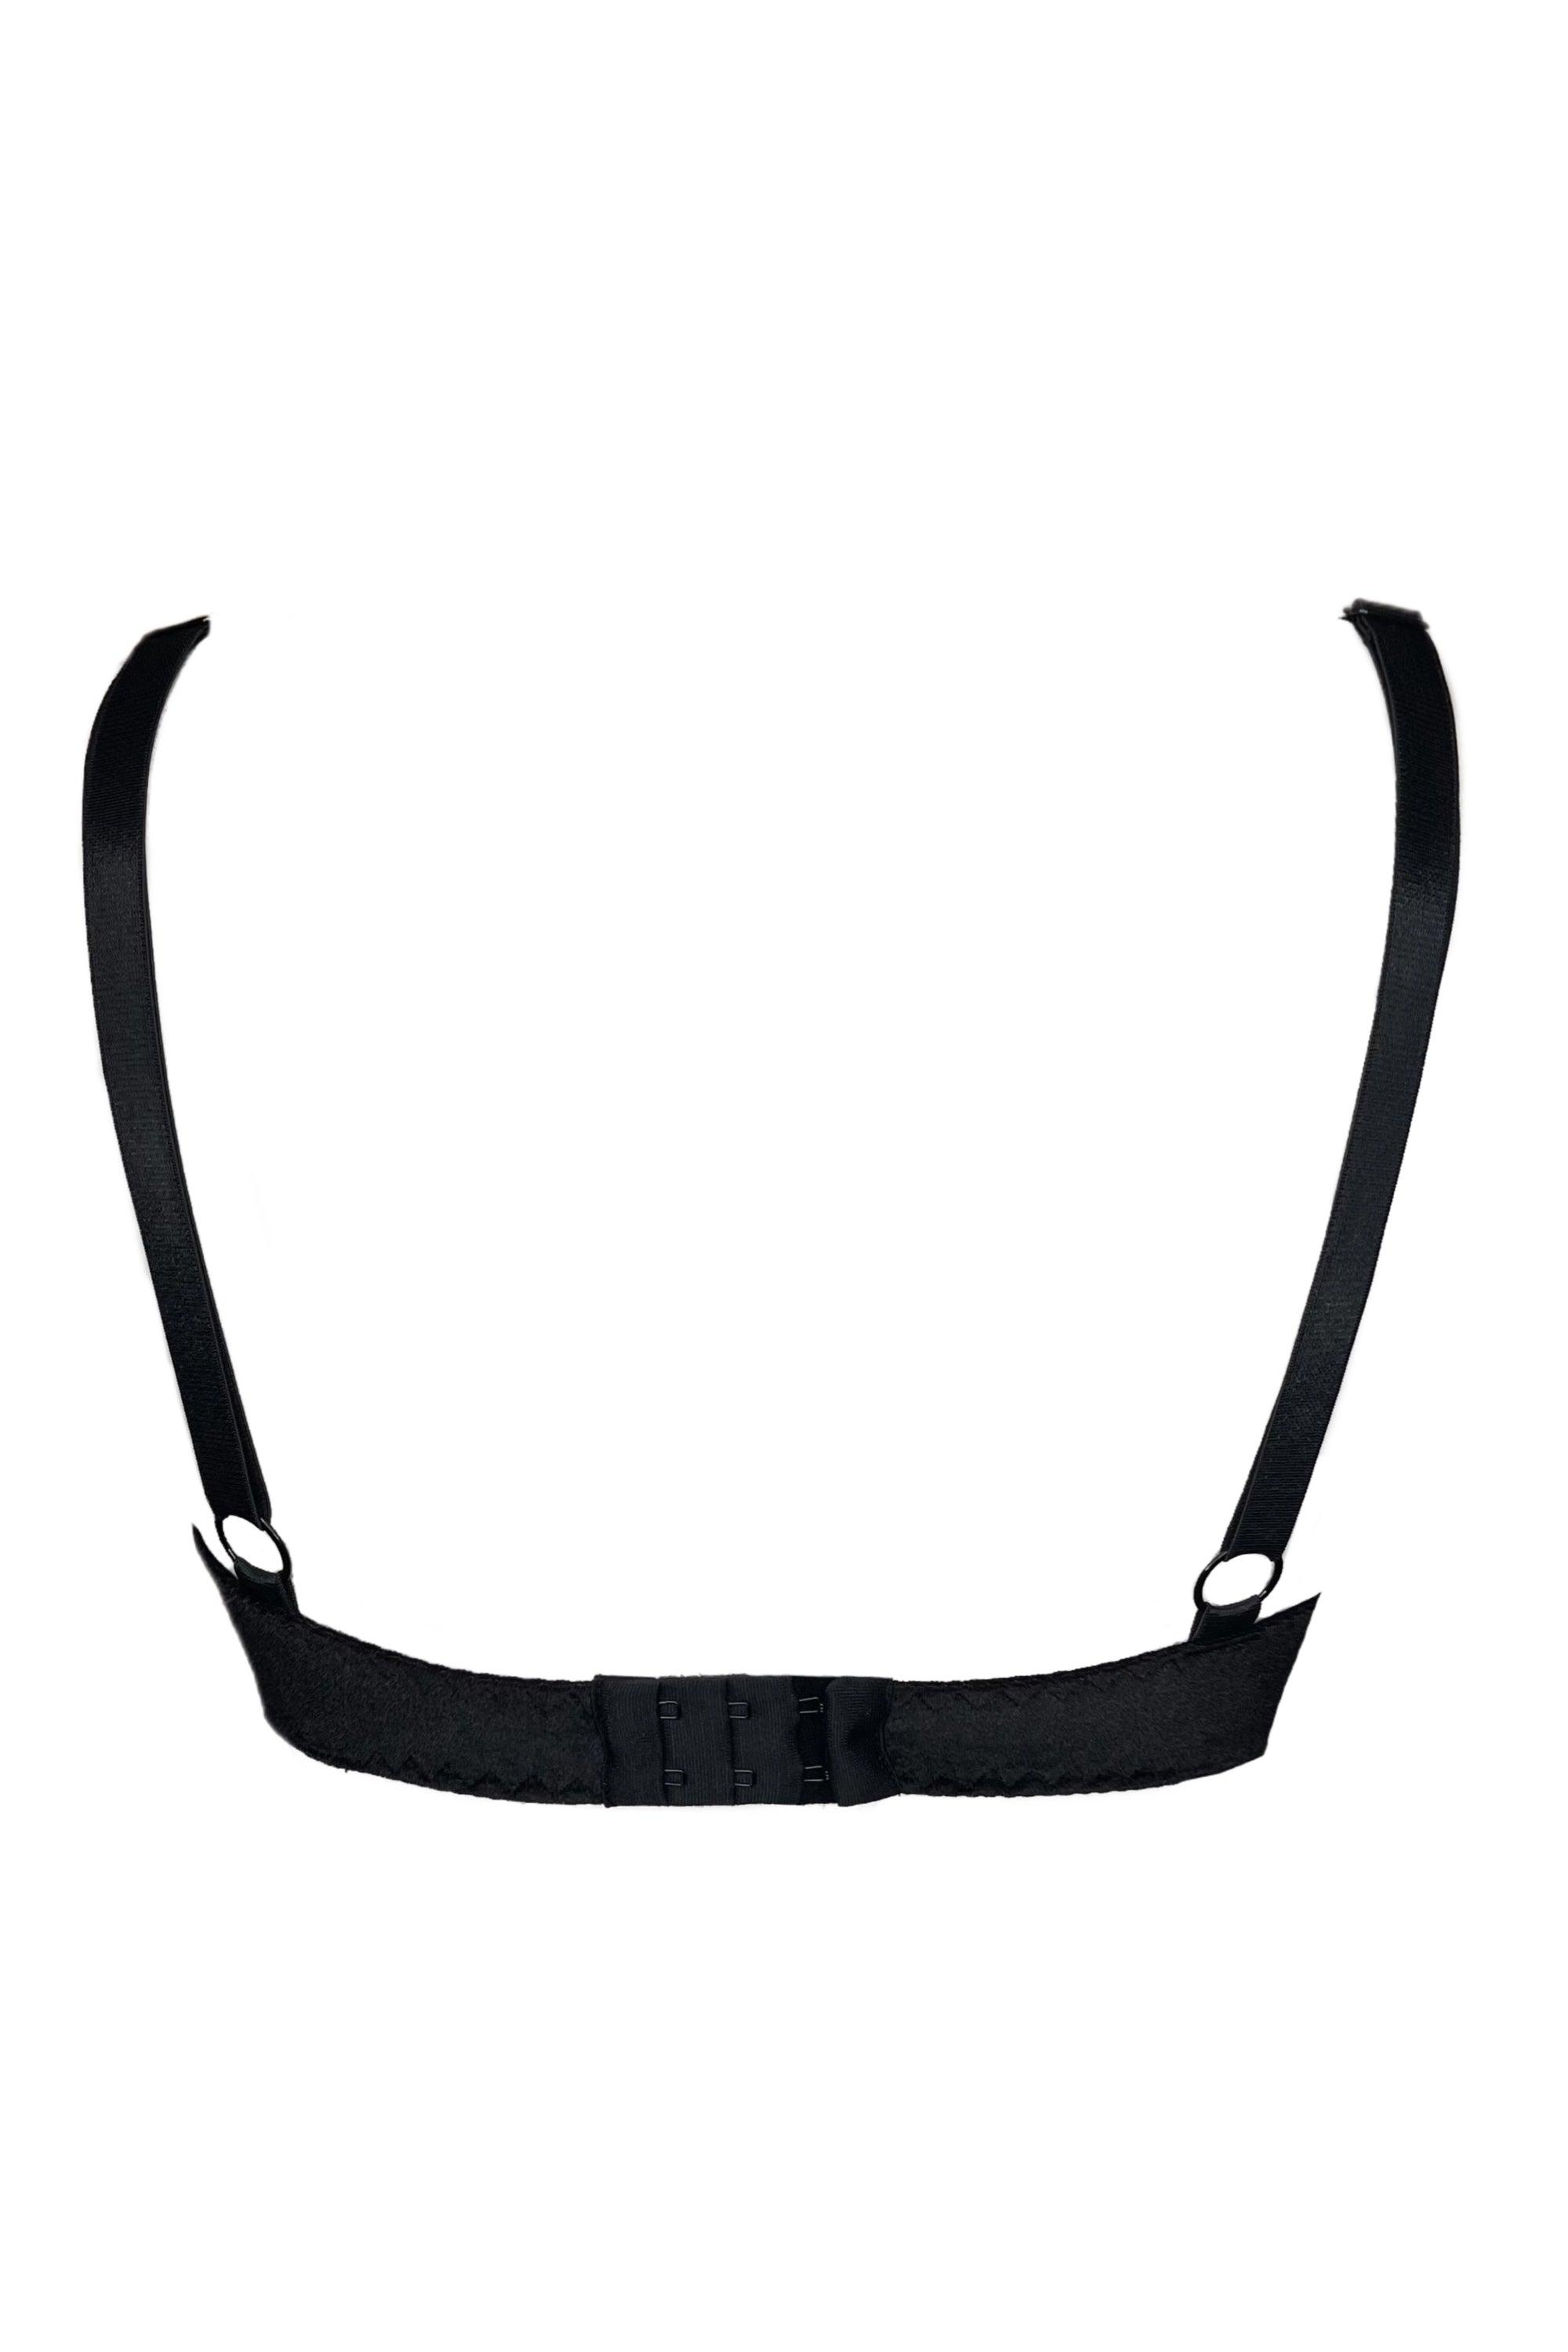 Velvetta black soft bra with chains